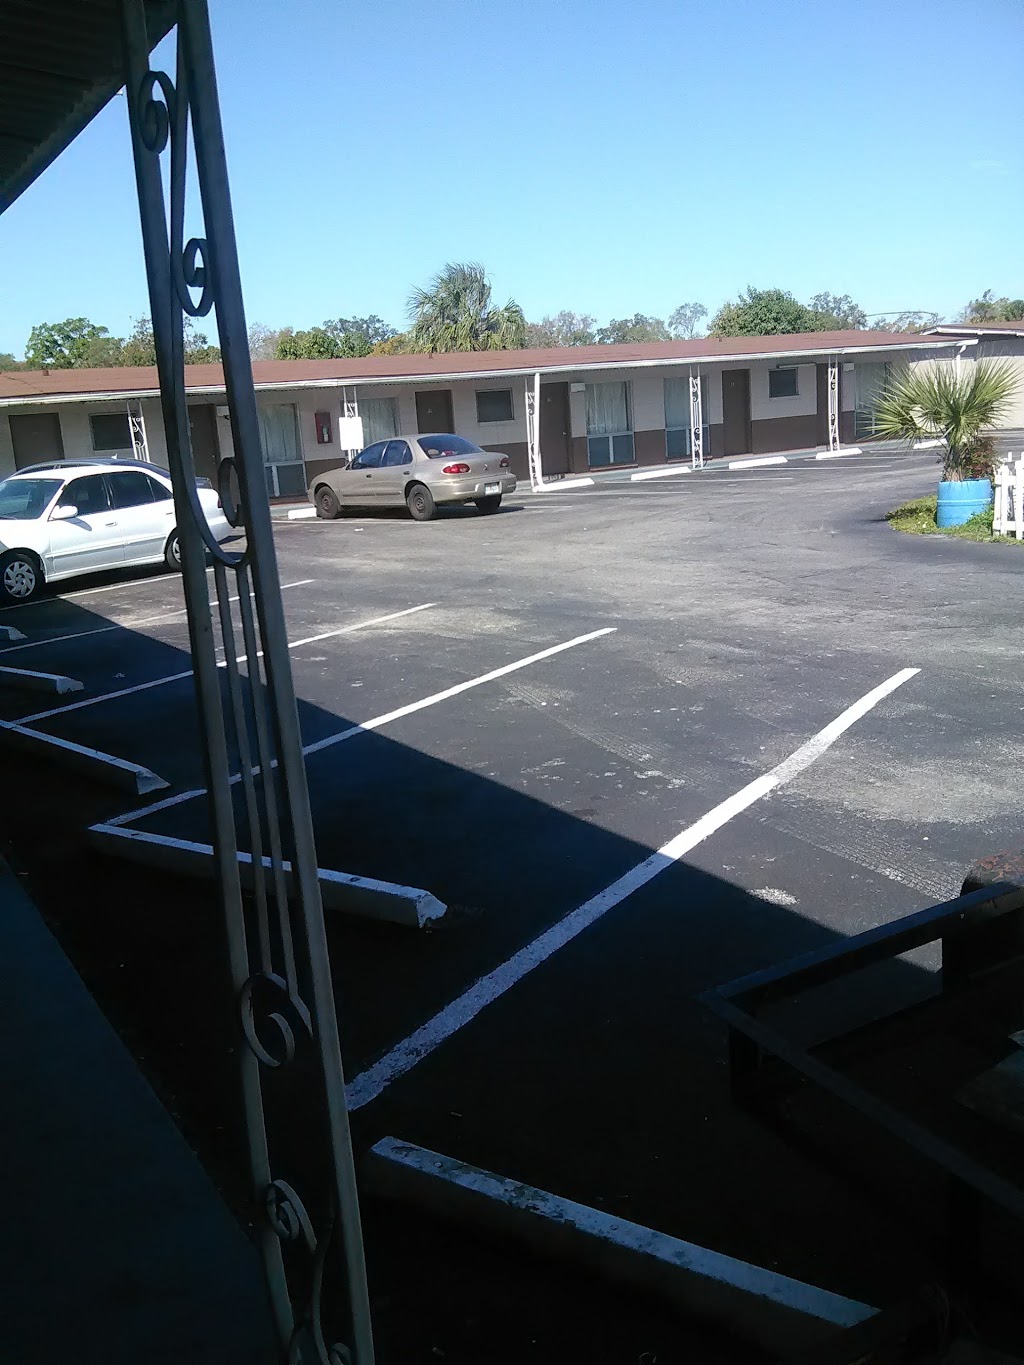 Sands Motel | 2400 S Orange Blossom Trl, Orlando, FL 32805 | Phone: (407) 841-3830